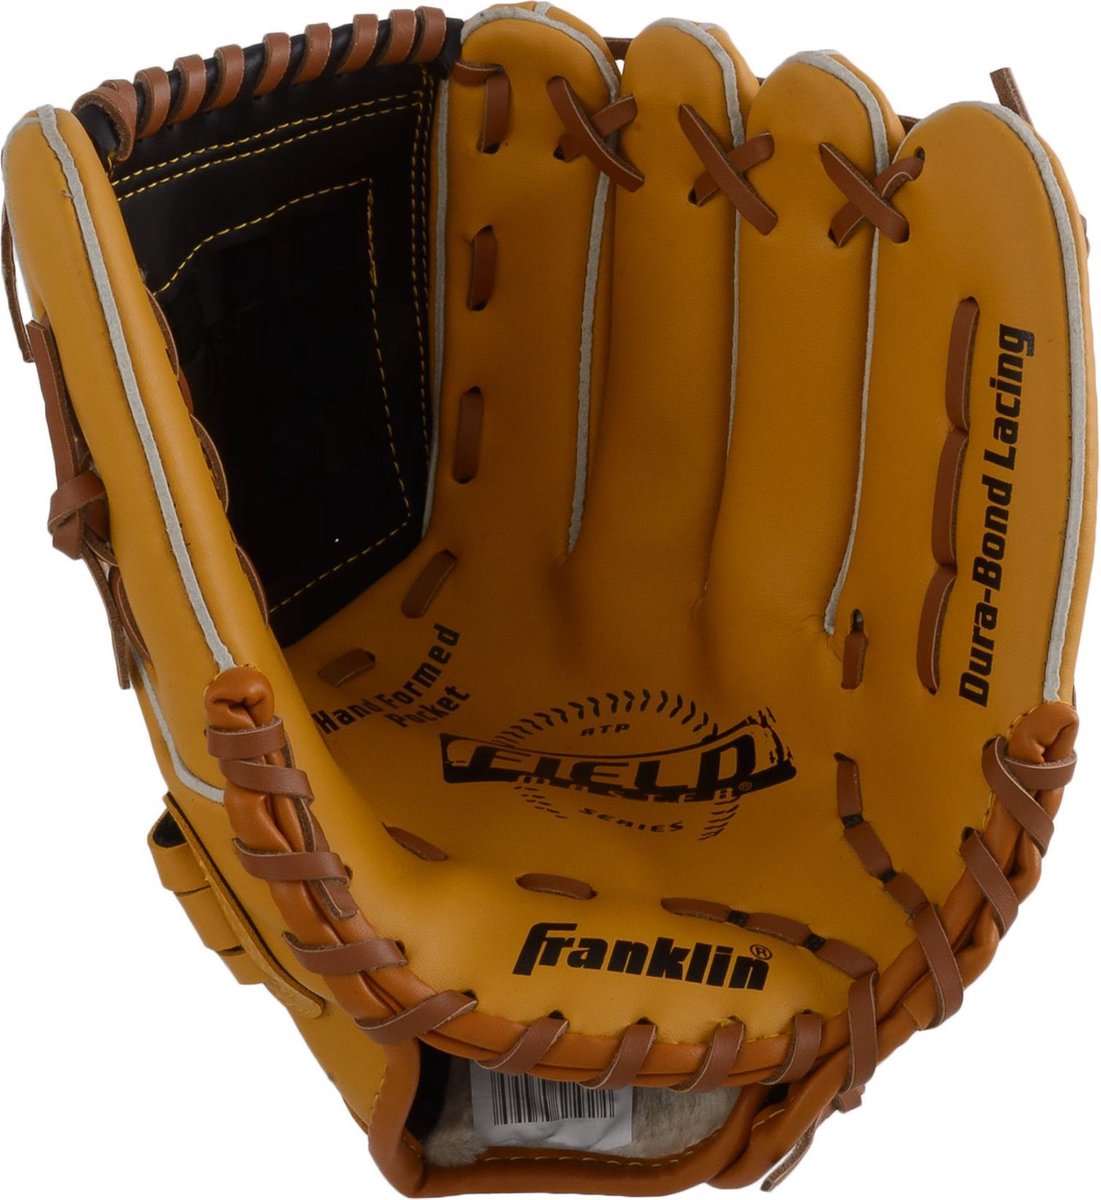 Franklin Baseball Handschoen 22603 Honkbalhandschoen - Unisex - lichtbruin  | bol.com